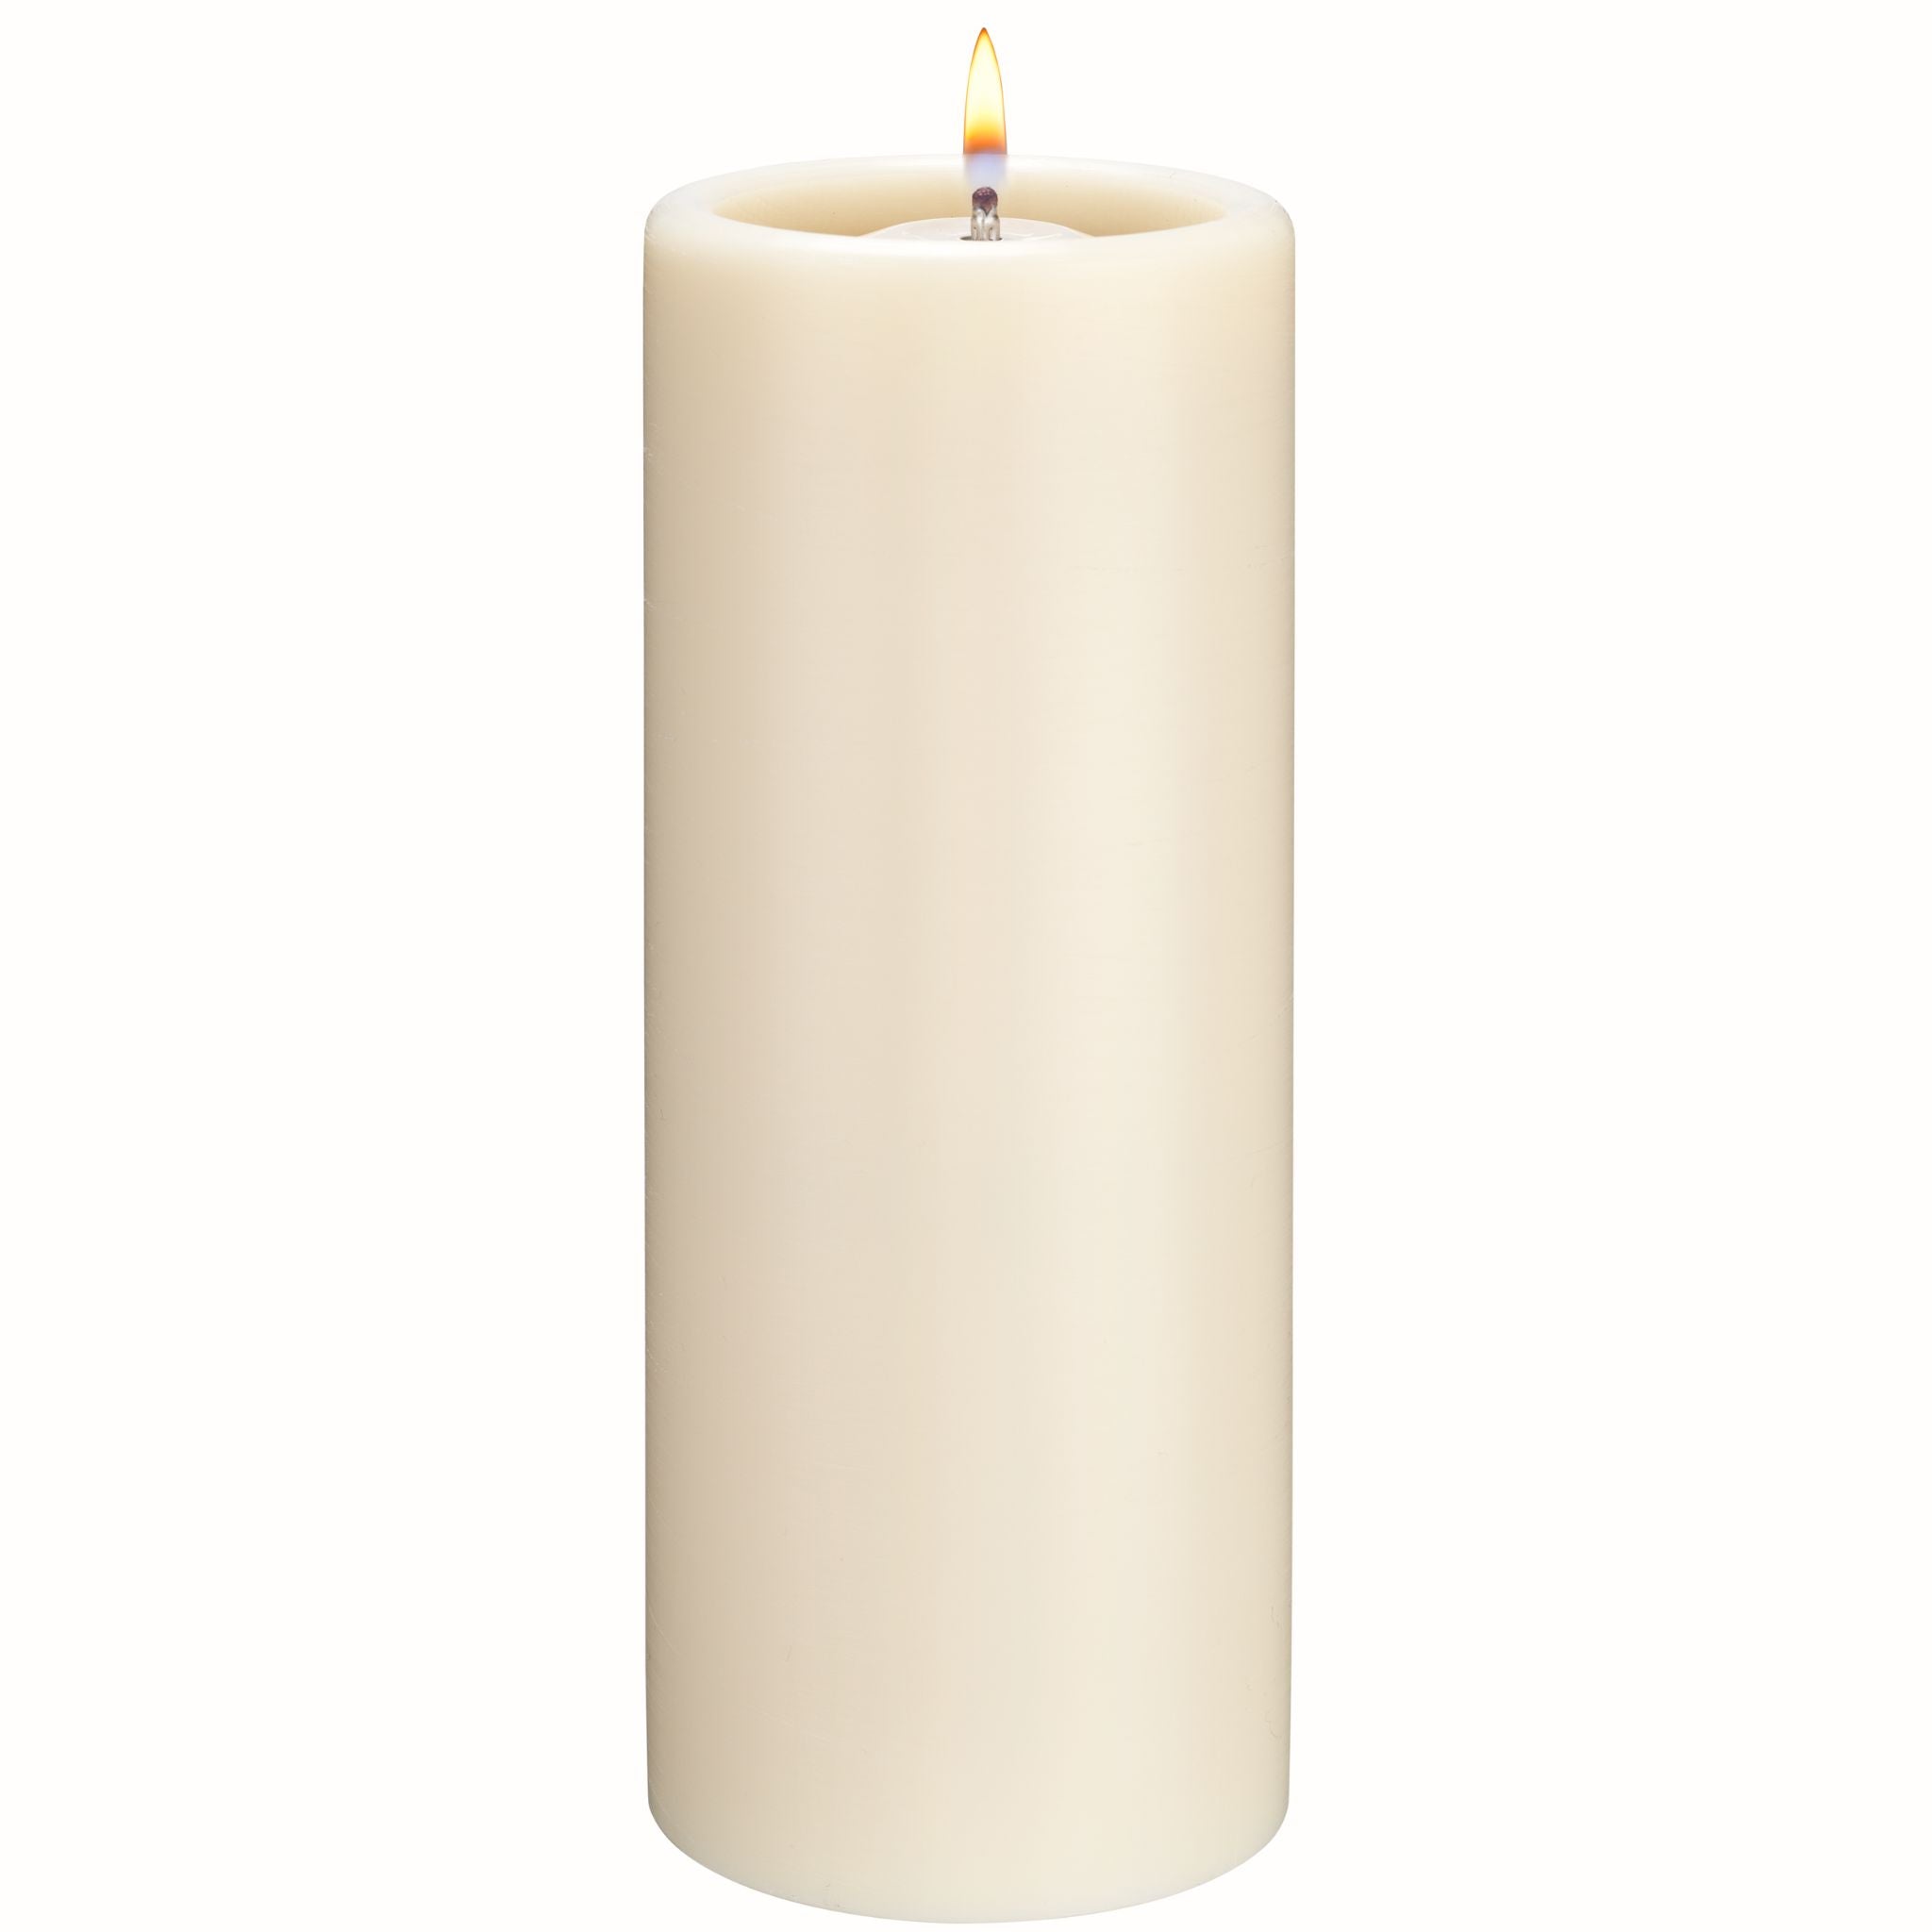 Safety candle 2 pieces for eternal burner 40AL